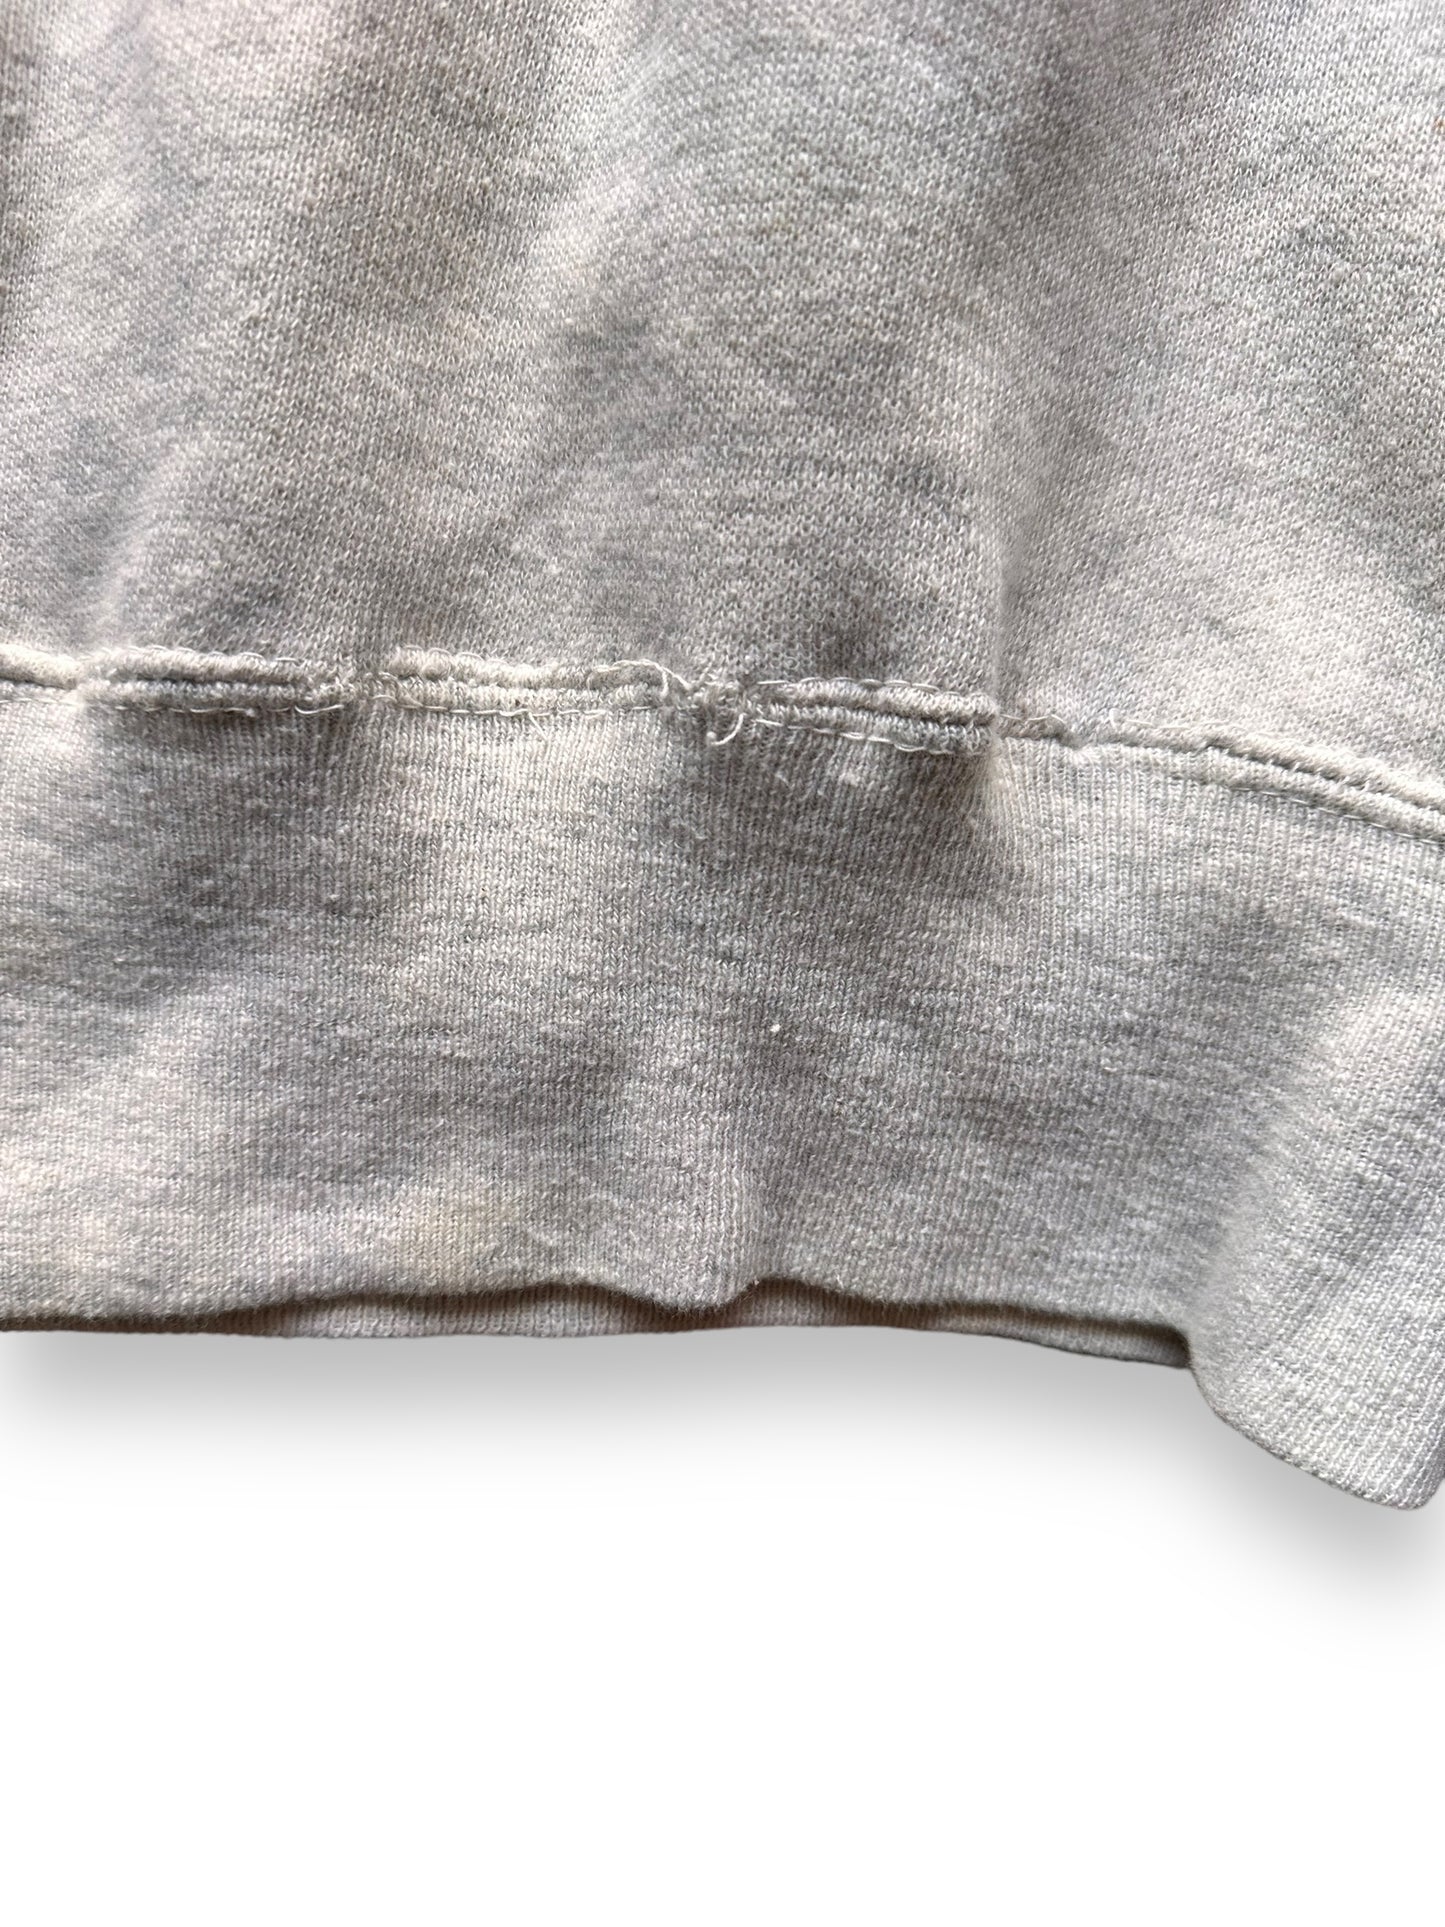 Dropped Stitches on Seam on Vintage Minnesota Crewneck Sweatshirt SZ L | Vintage Crewneck Sweatshirts Seattle | Barn Owl Vintage Seattle